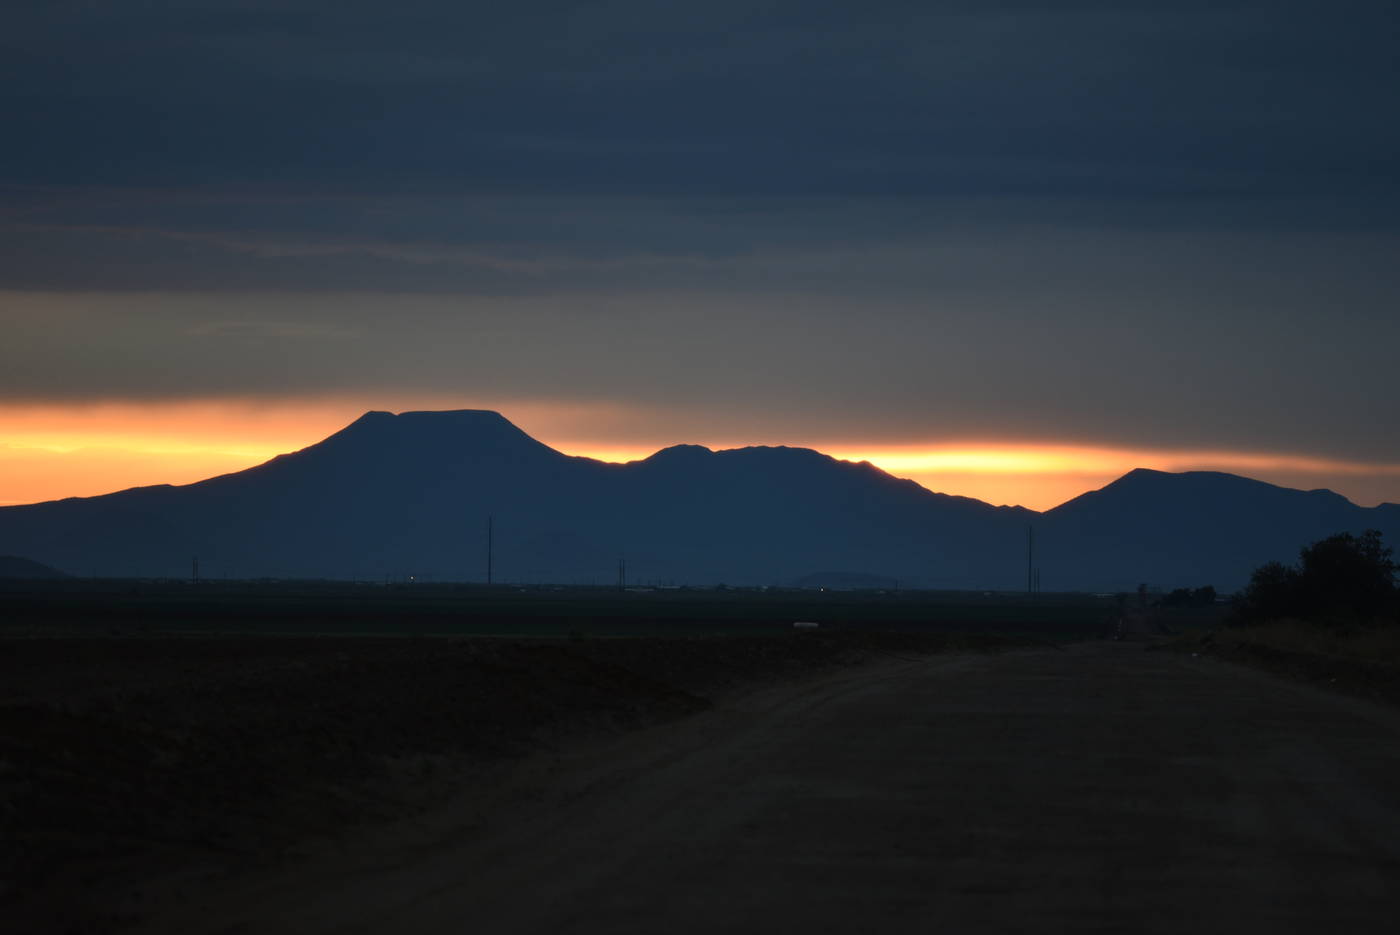 Sonoran Desert sunset